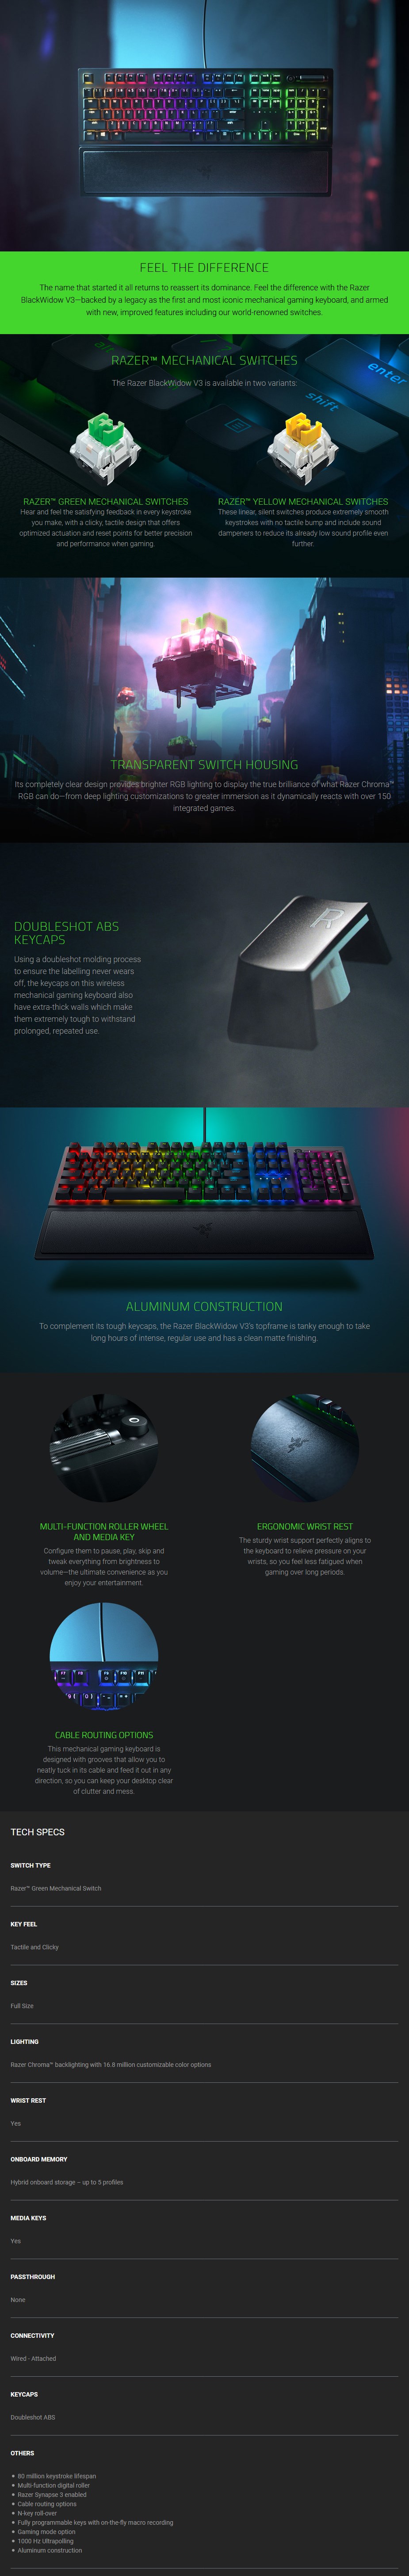 Razer BlackWidow V3 Mechanical Gaming Keyboard - Green Switches - Overview 1